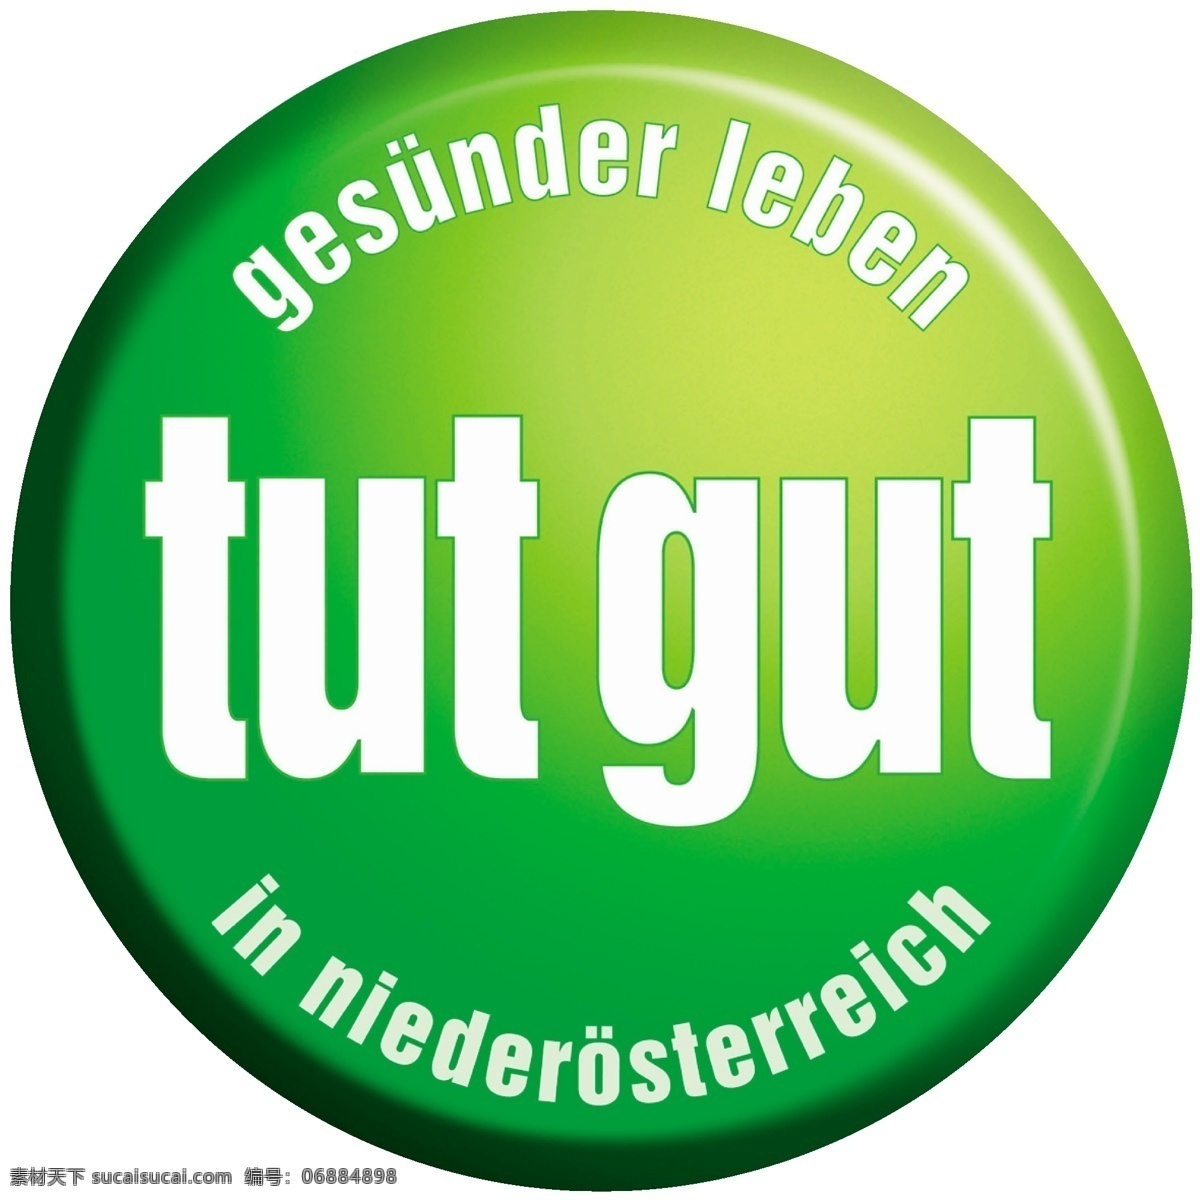 gesuender 生活 肠道 niederoesterreich 啧啧 图坦 卡蒙 标志 酸奶 中 自由 psd源文件 logo设计